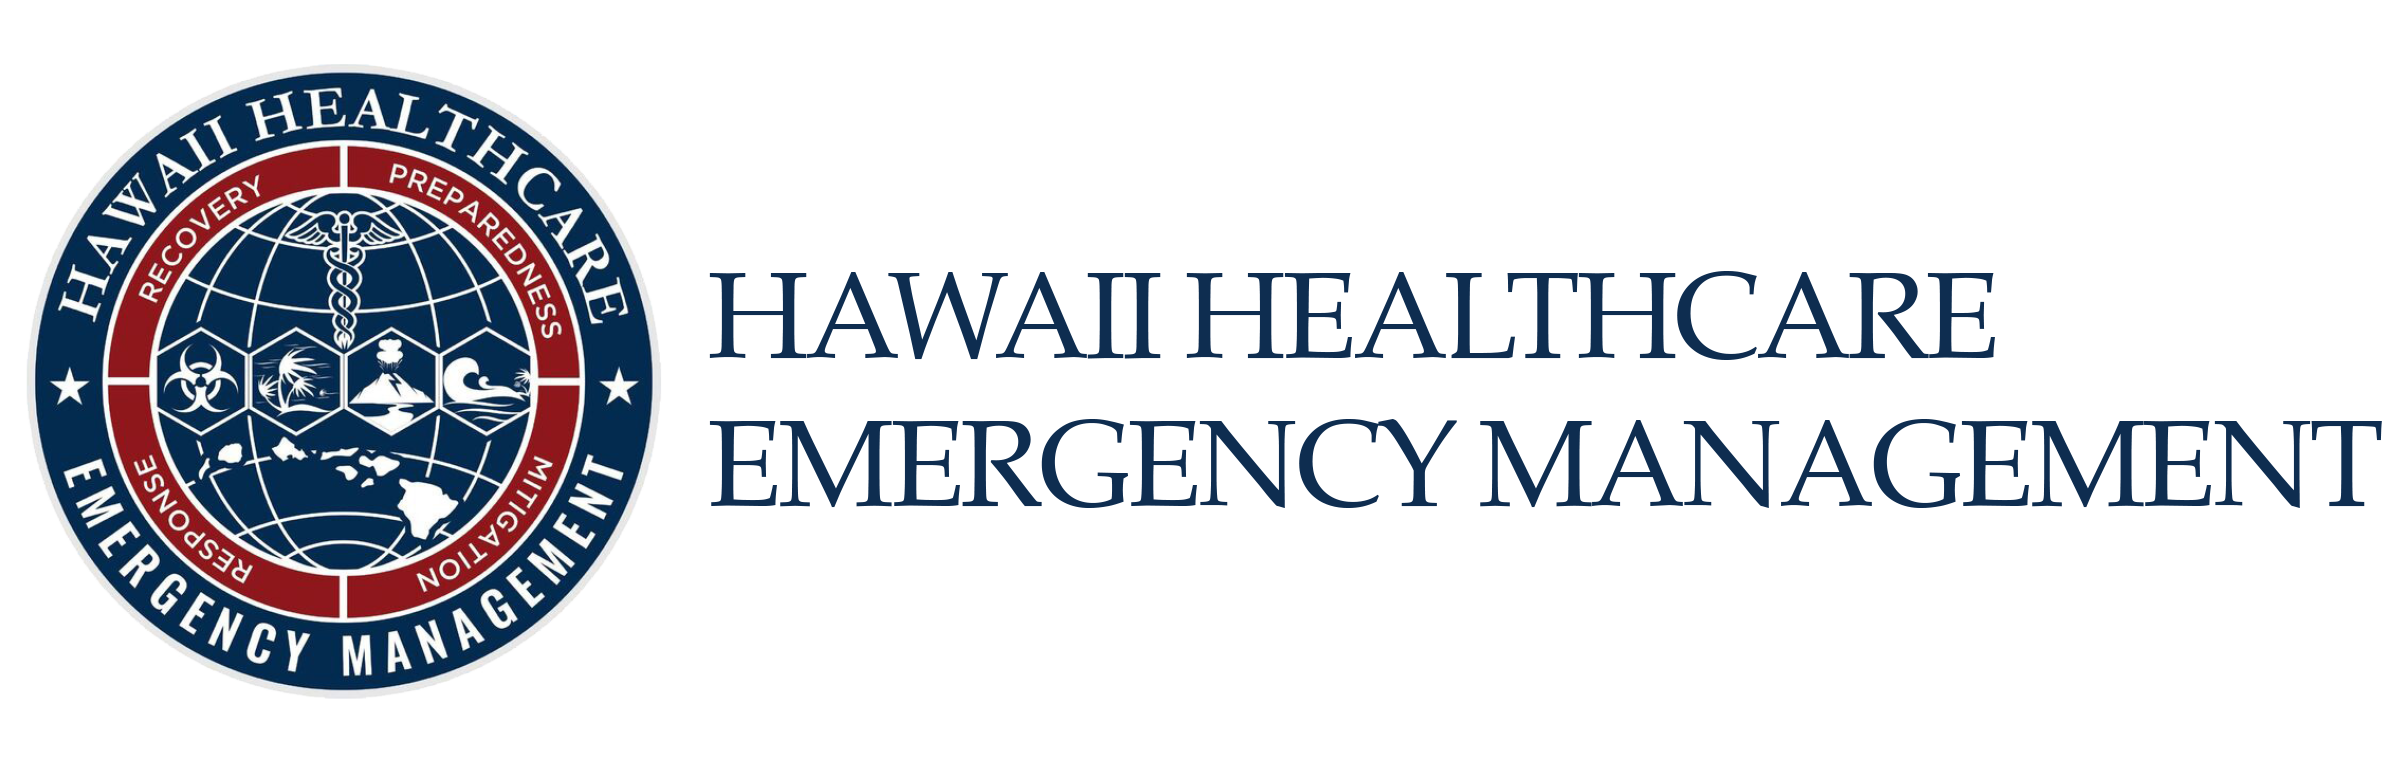 Hawaii Healthcare Emergency Management